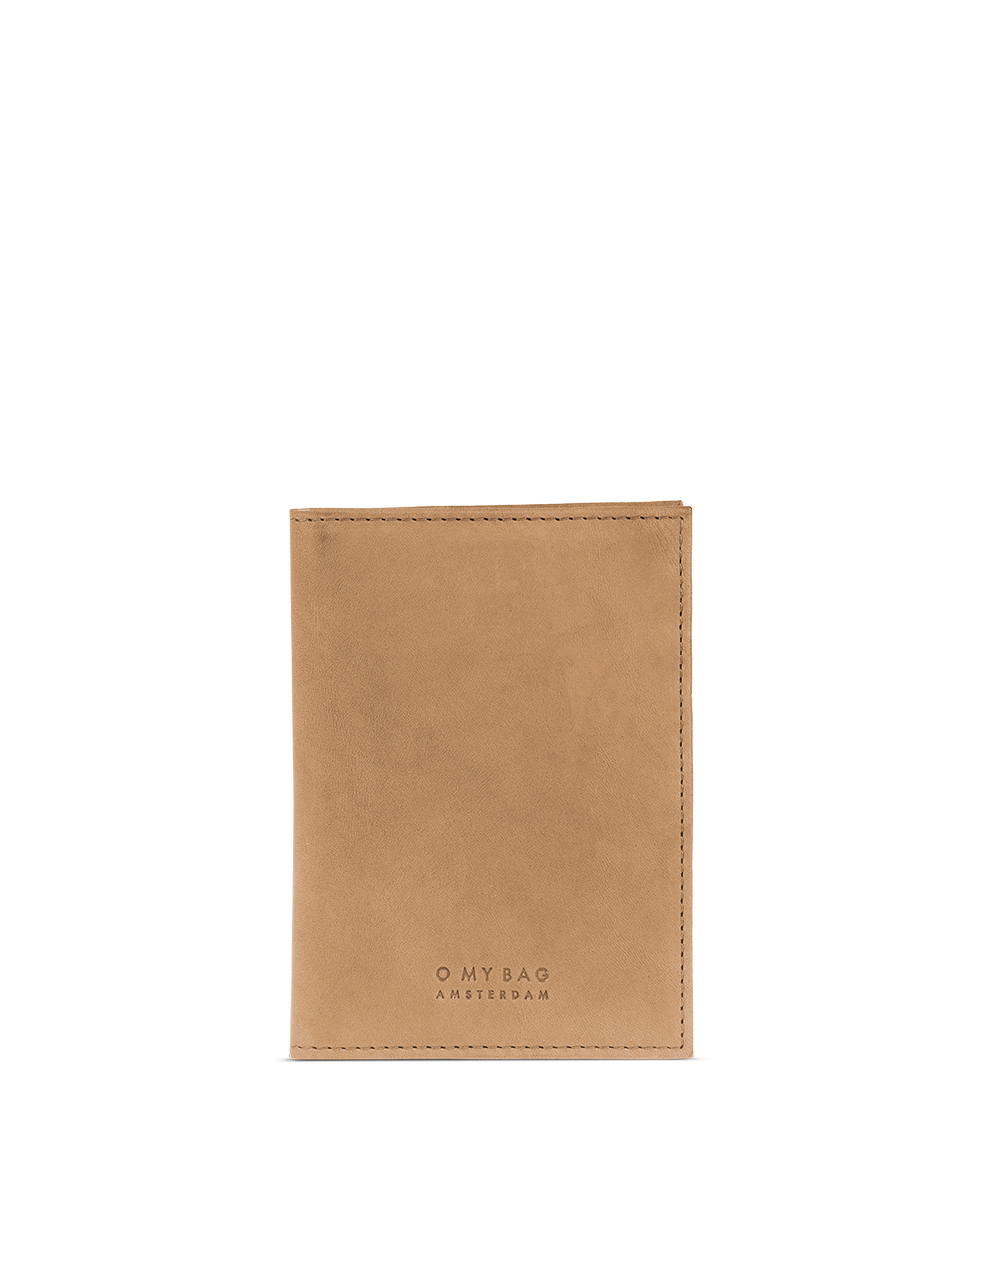 Passport Holder Camel Hunter Leather. Small rectangular passport holder for travelling. Front product image